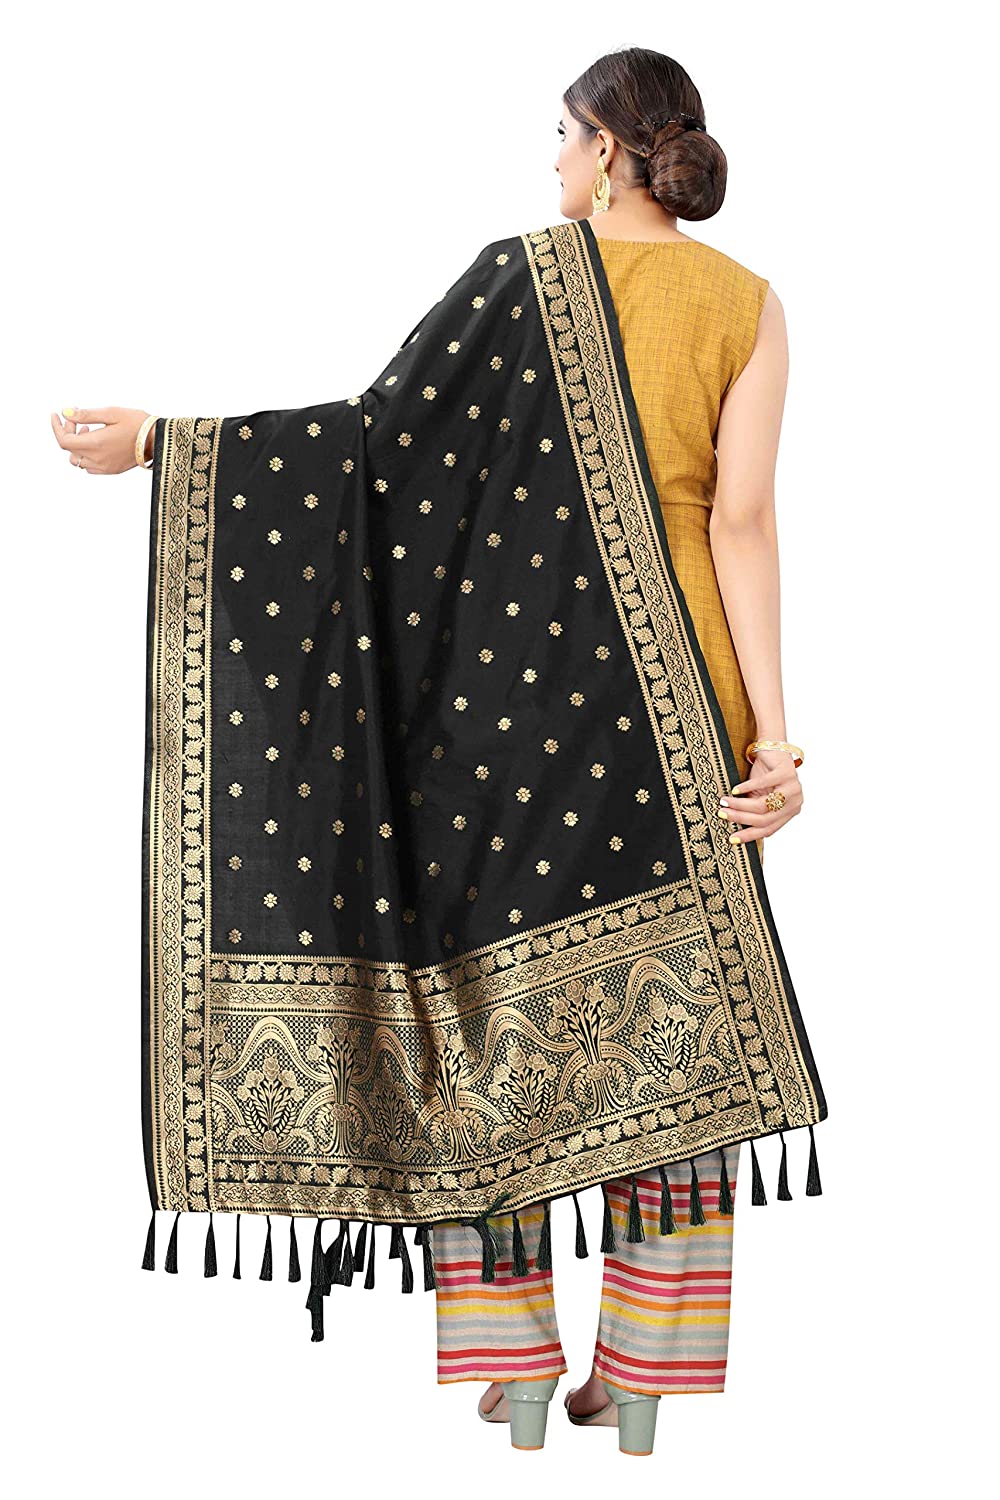 Enthone Women's Woven Ethnic Motifs Banarasi Silk Dupatta